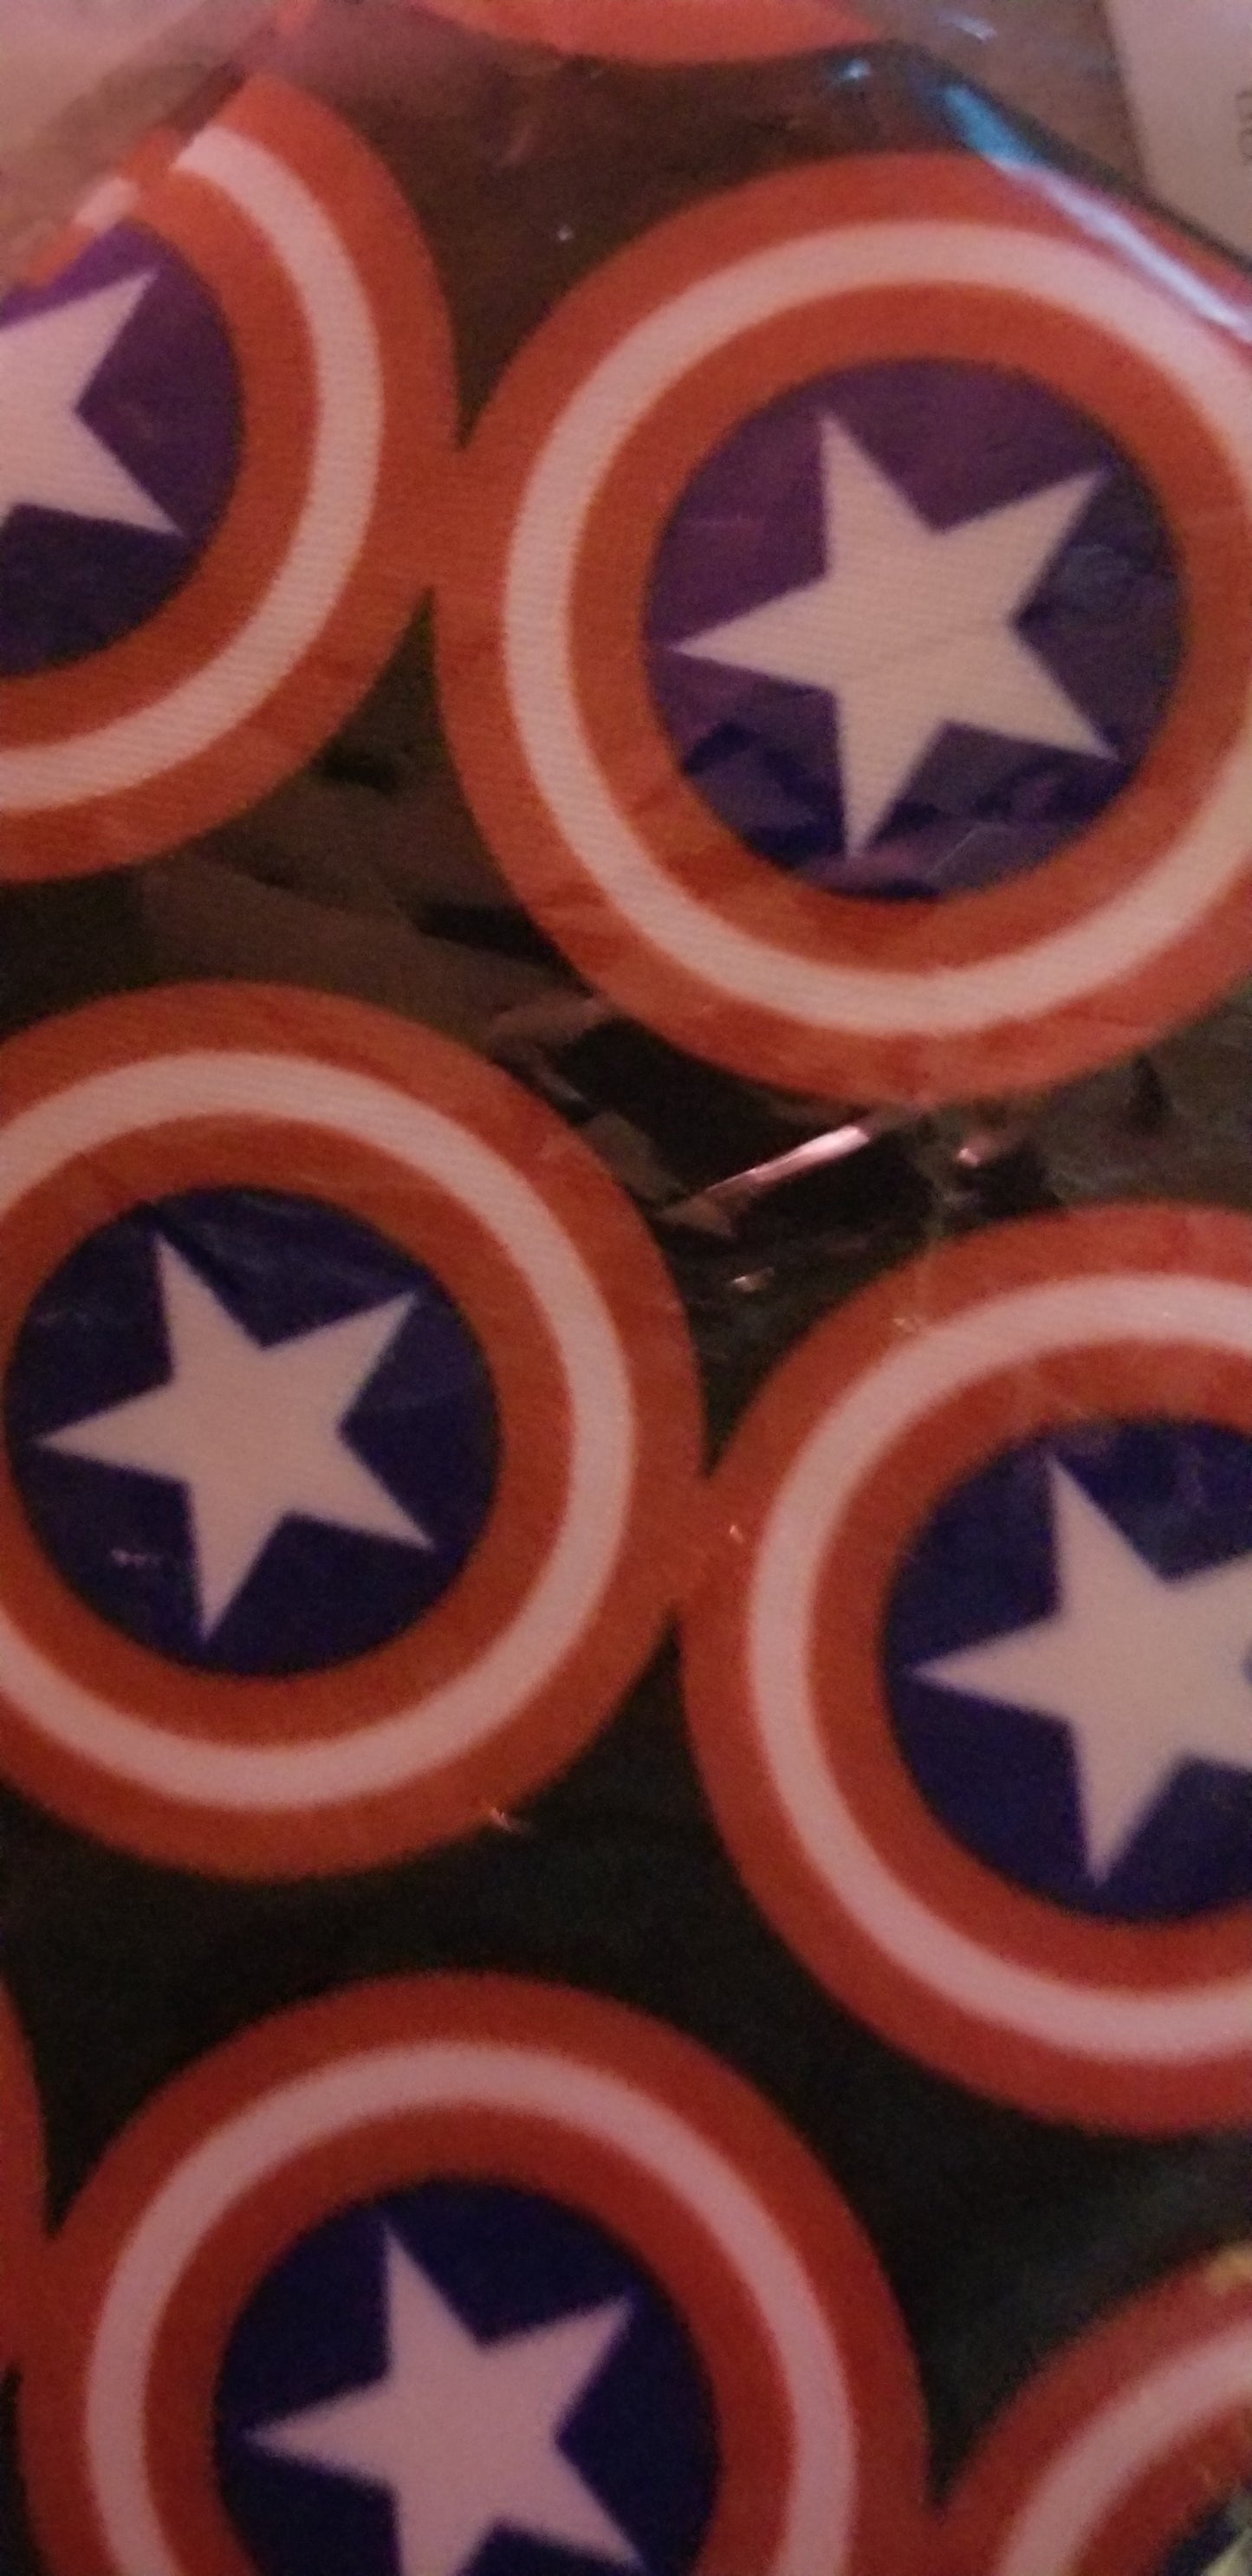 Captain America Mask In Stock - Keene's